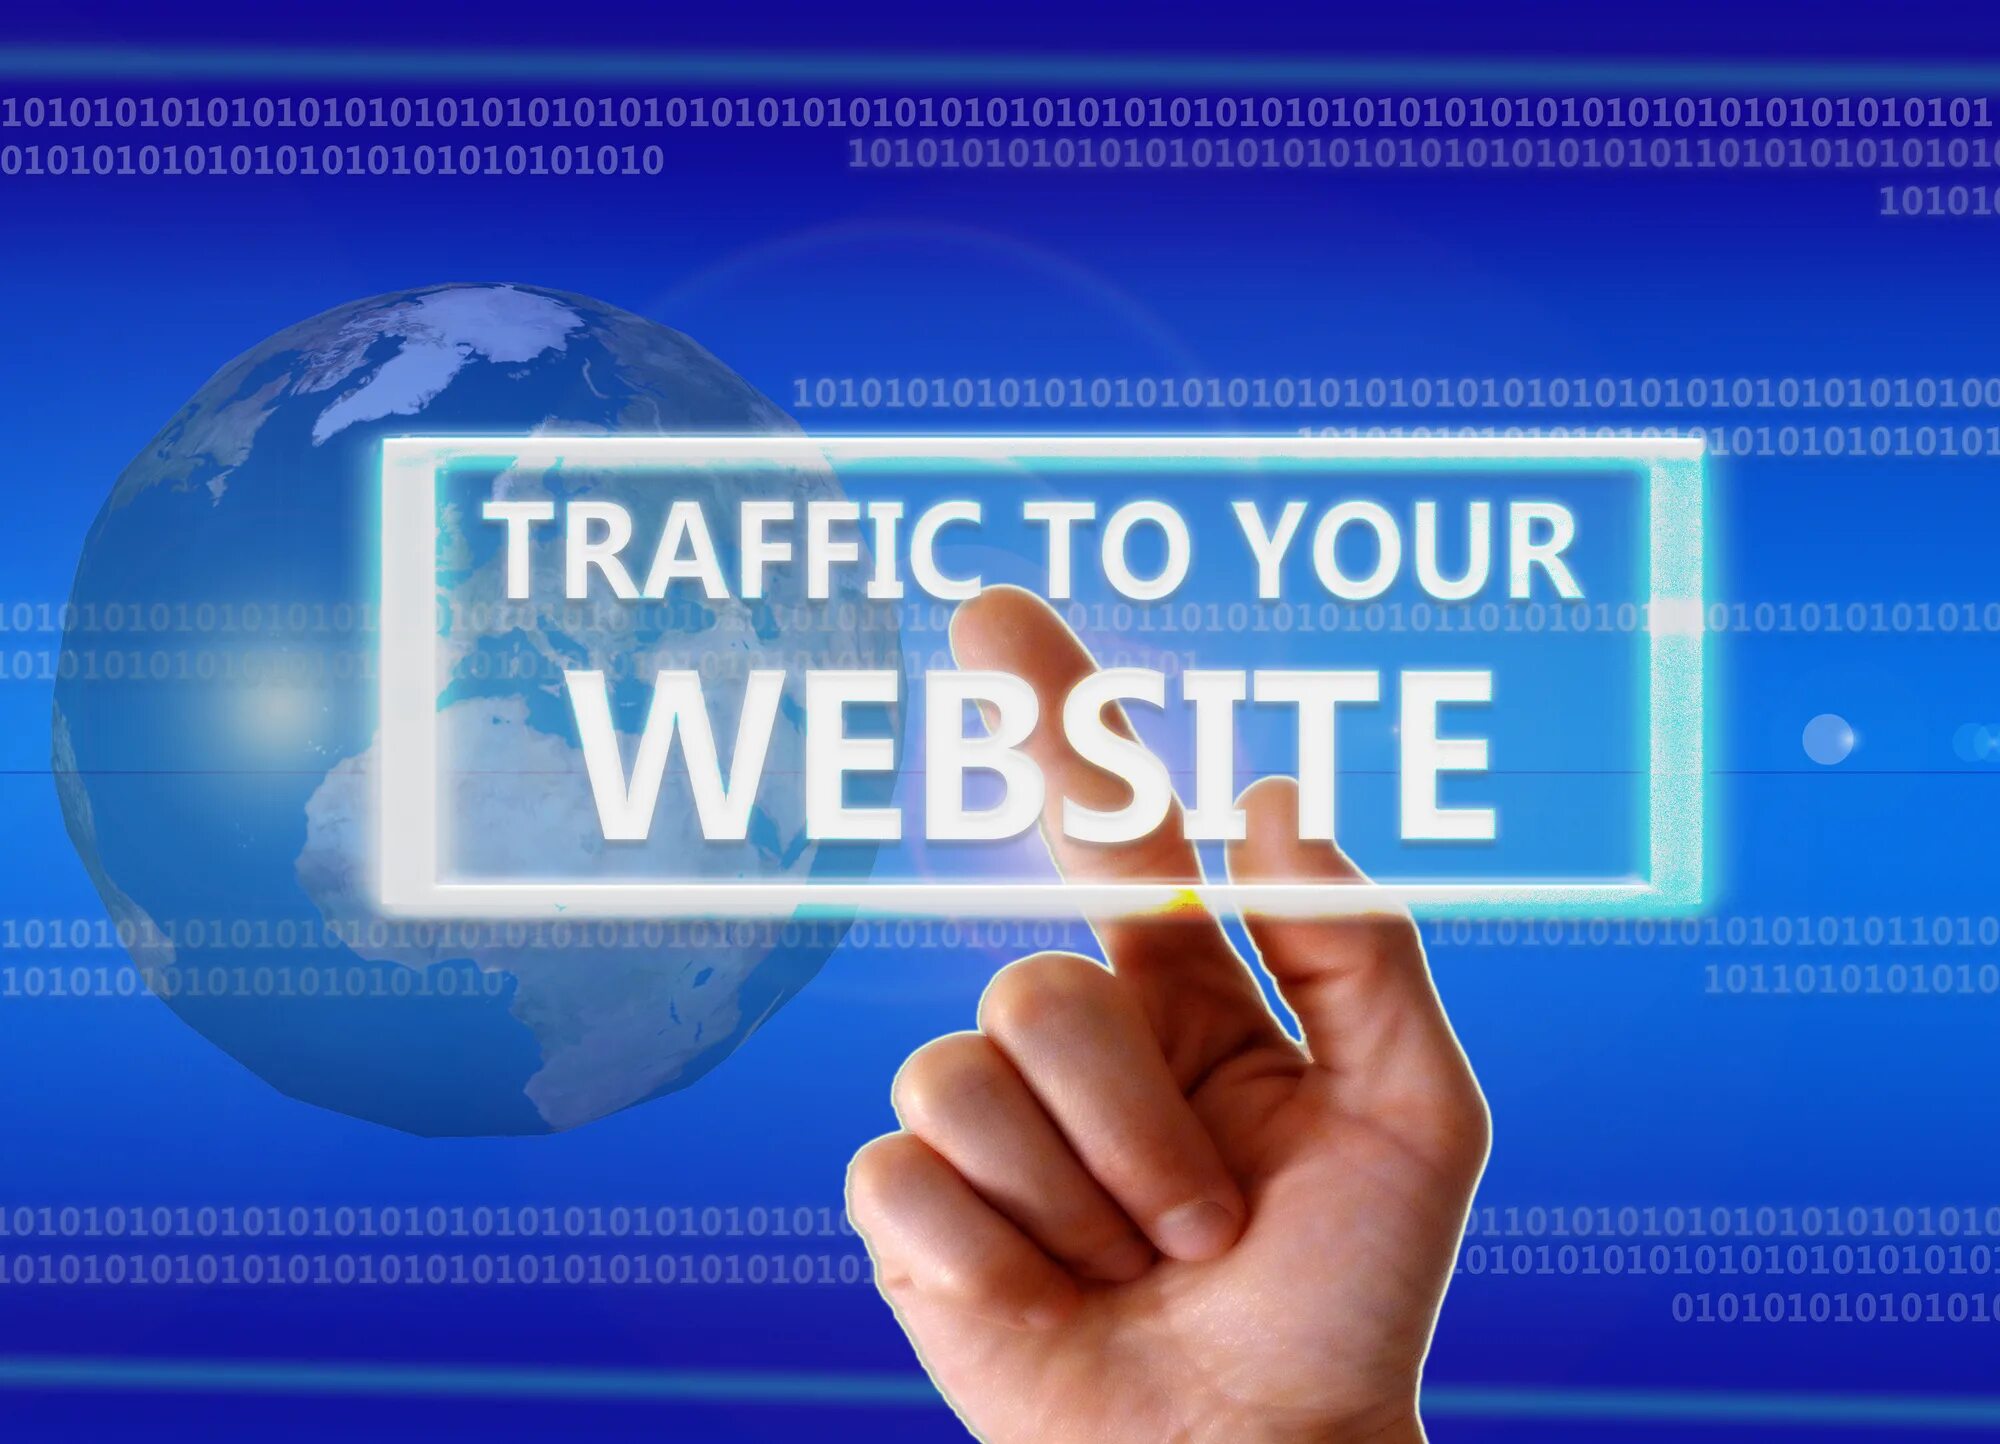 Website traffic. Вебинар. Вебинар надпись. Приглашаем на вебинар. Web трафик.